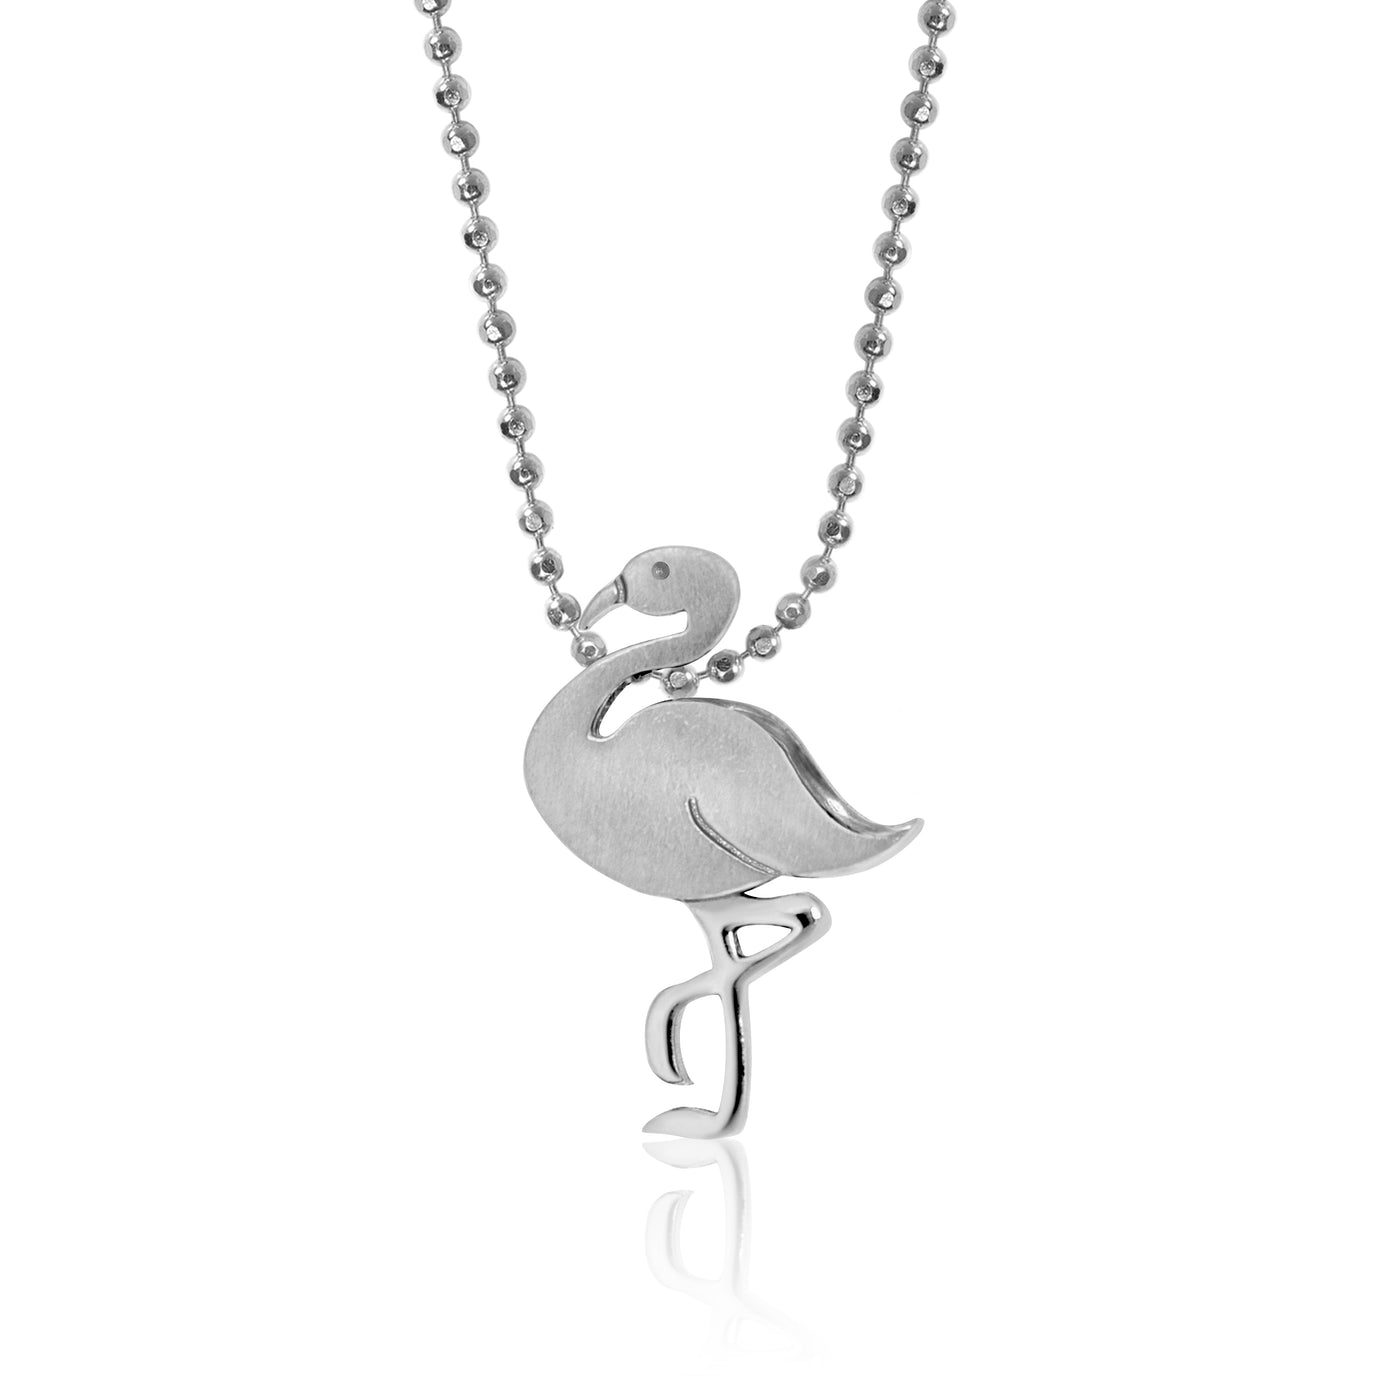 Alex Woo Sugarfina Flamingo Charm Necklace